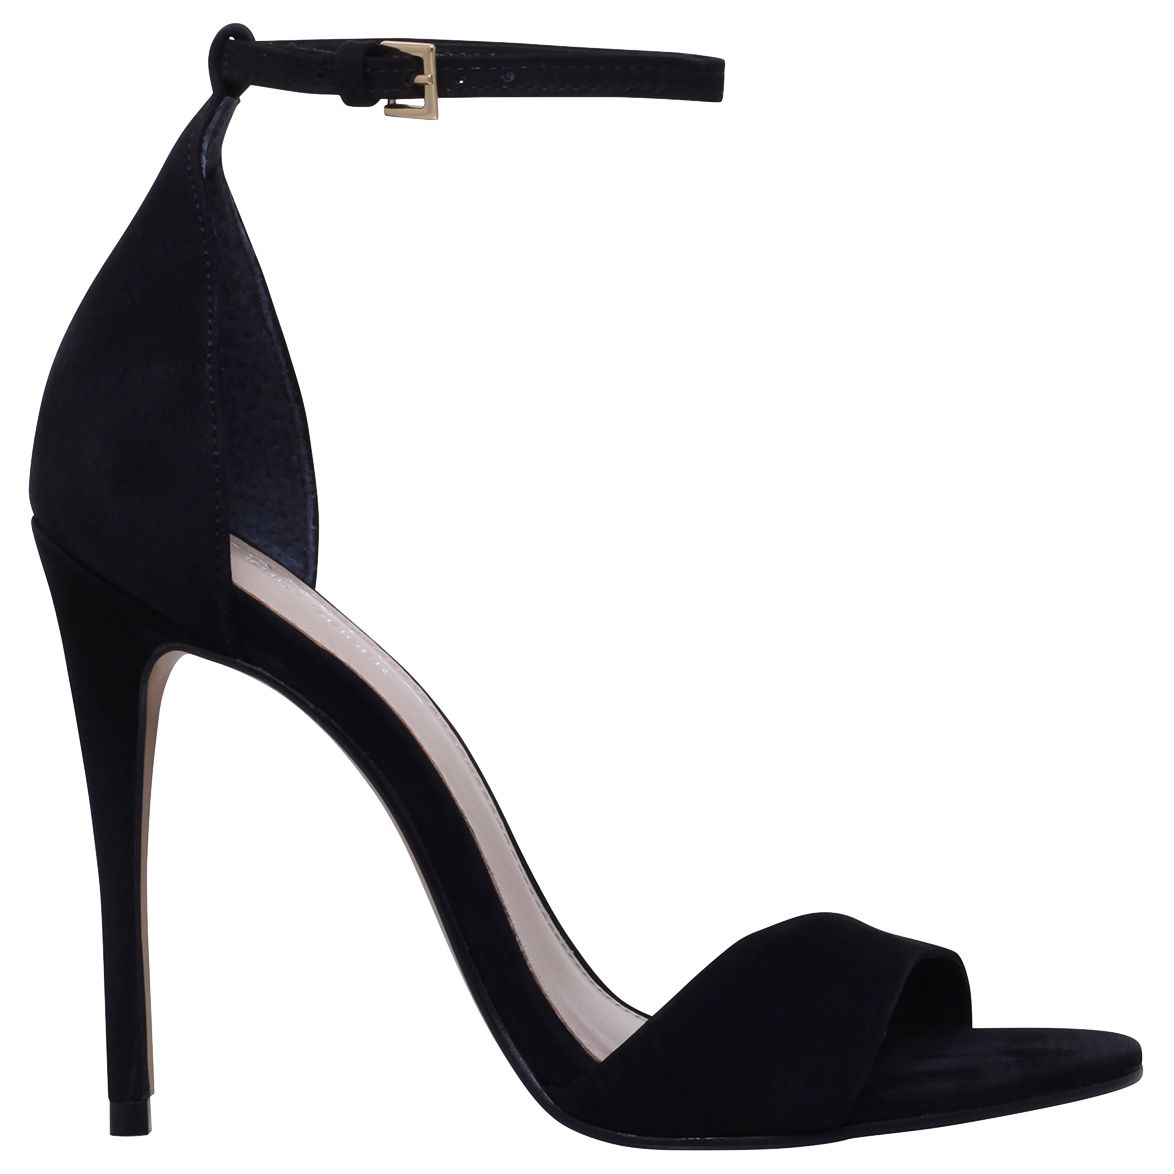 Carvela Glimmer High Heel Sandals, Black Nubuck, 4